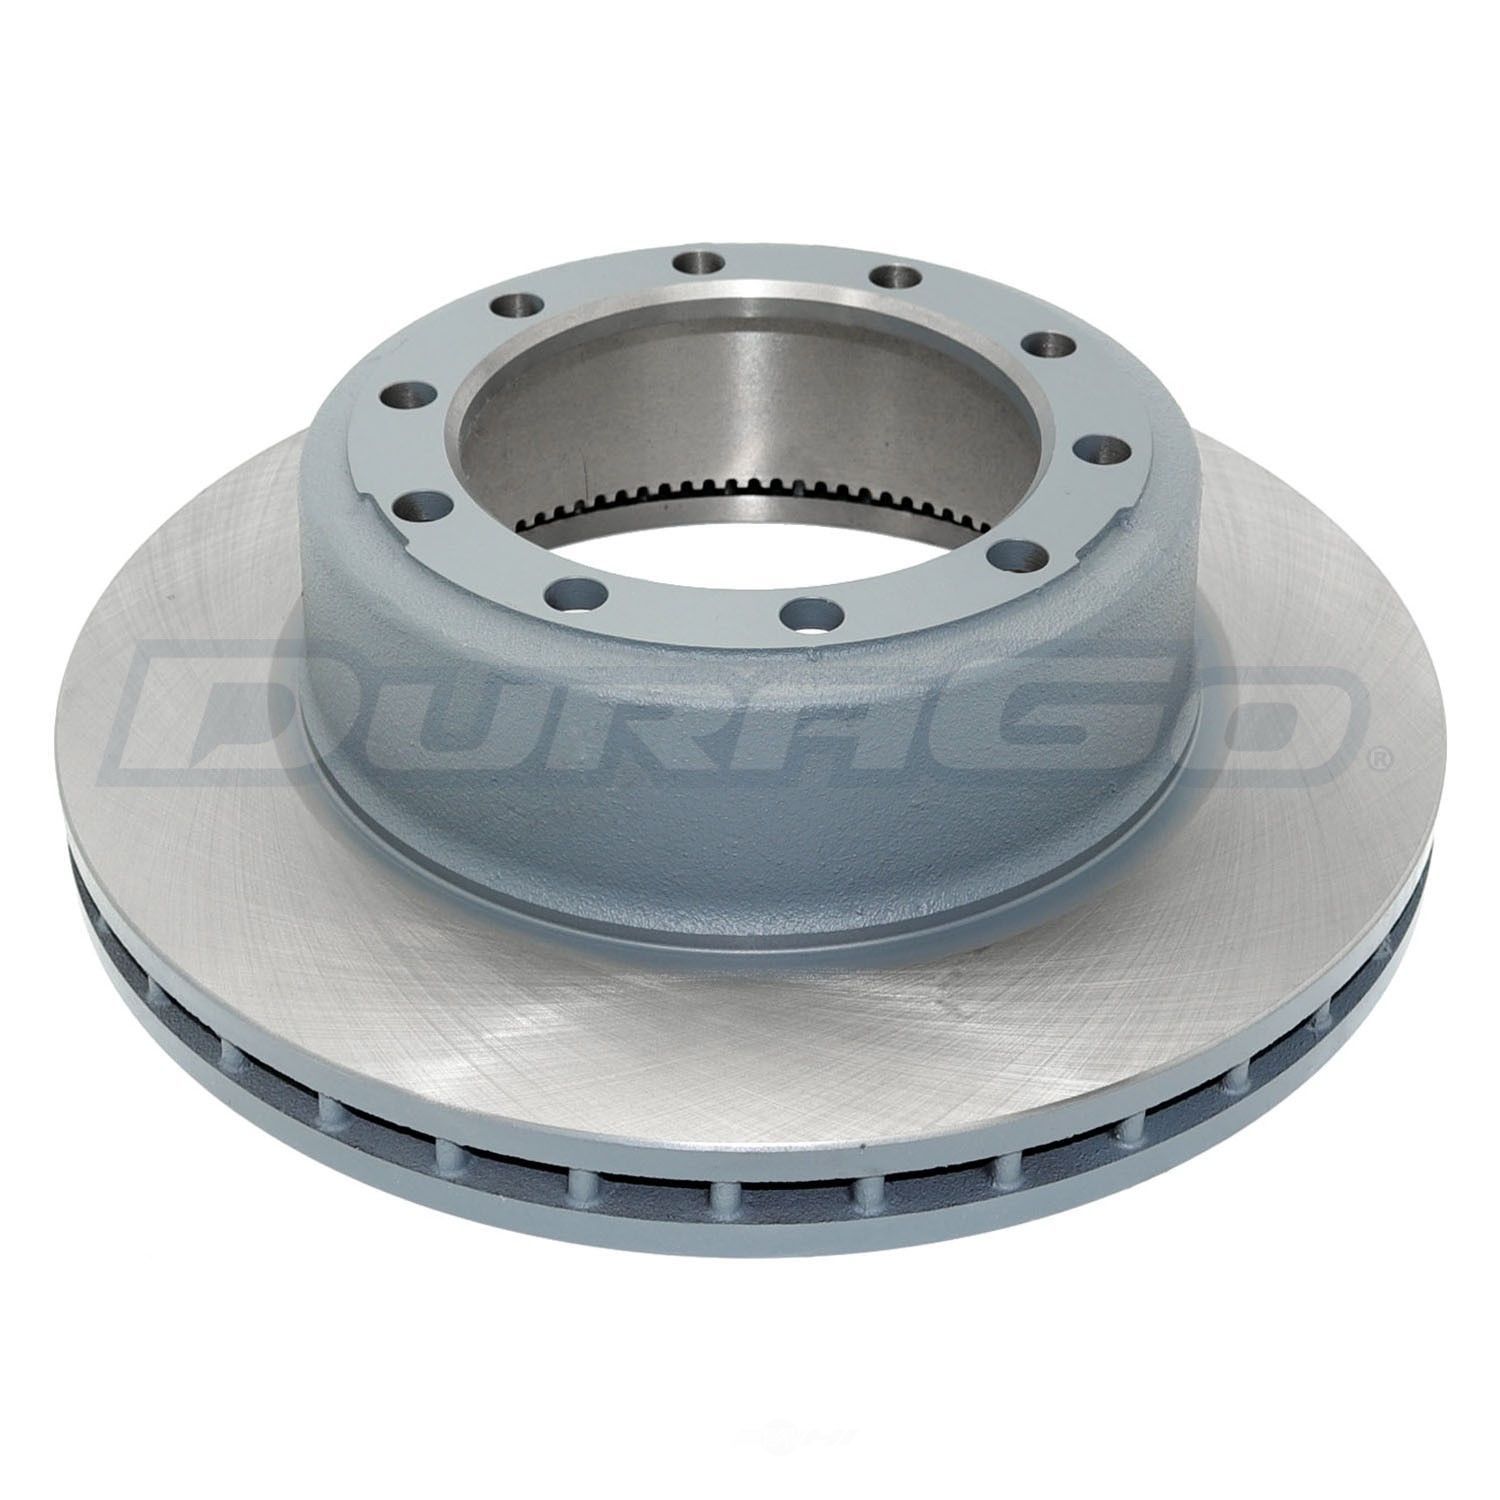 DURAGO TITANIUM SERIES  DTS - Disc Brake Rotor (Rear) - DTS BR901144-01